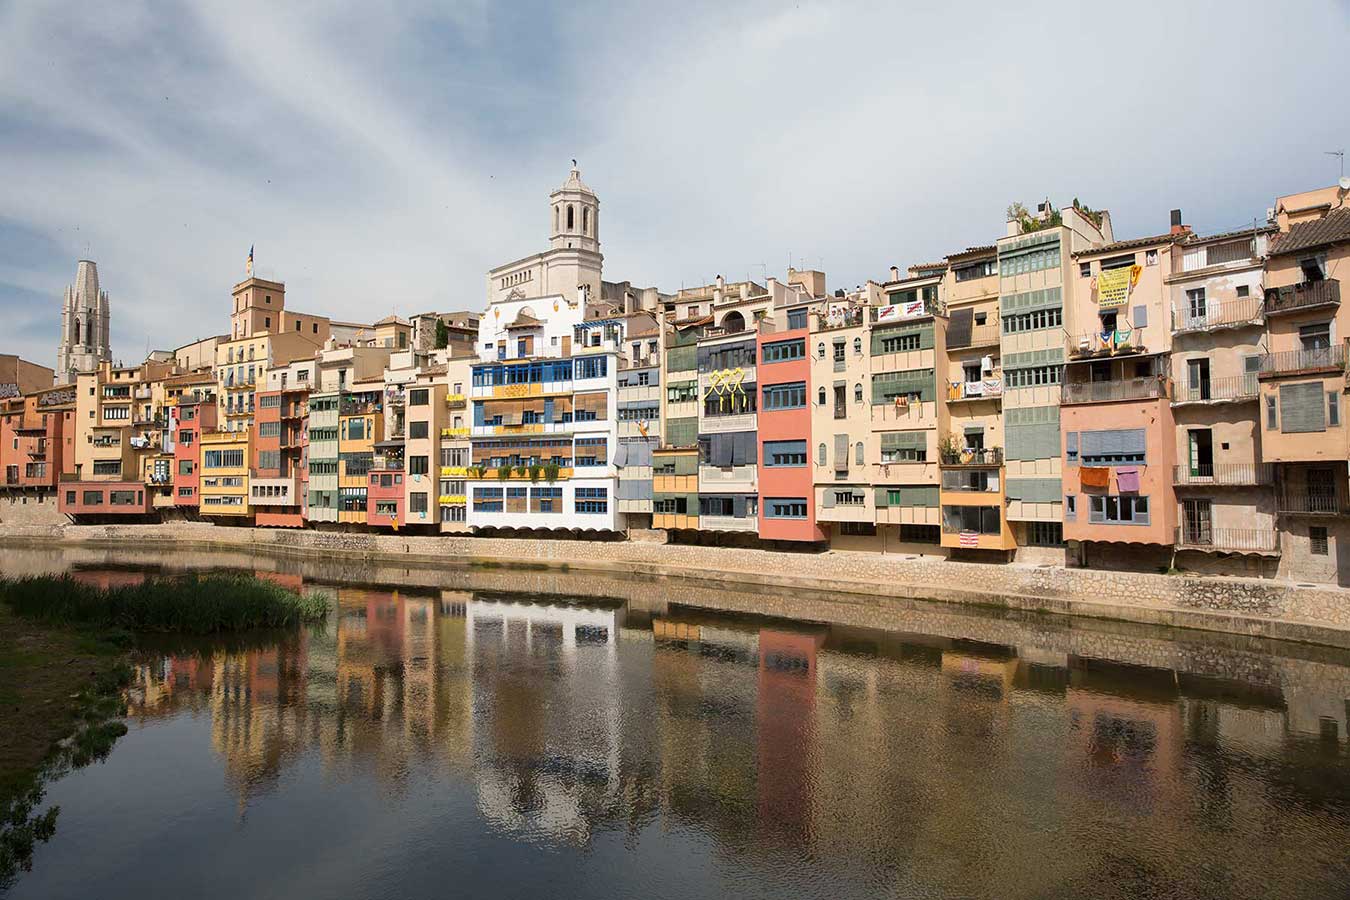 Girona, north of Barcelona